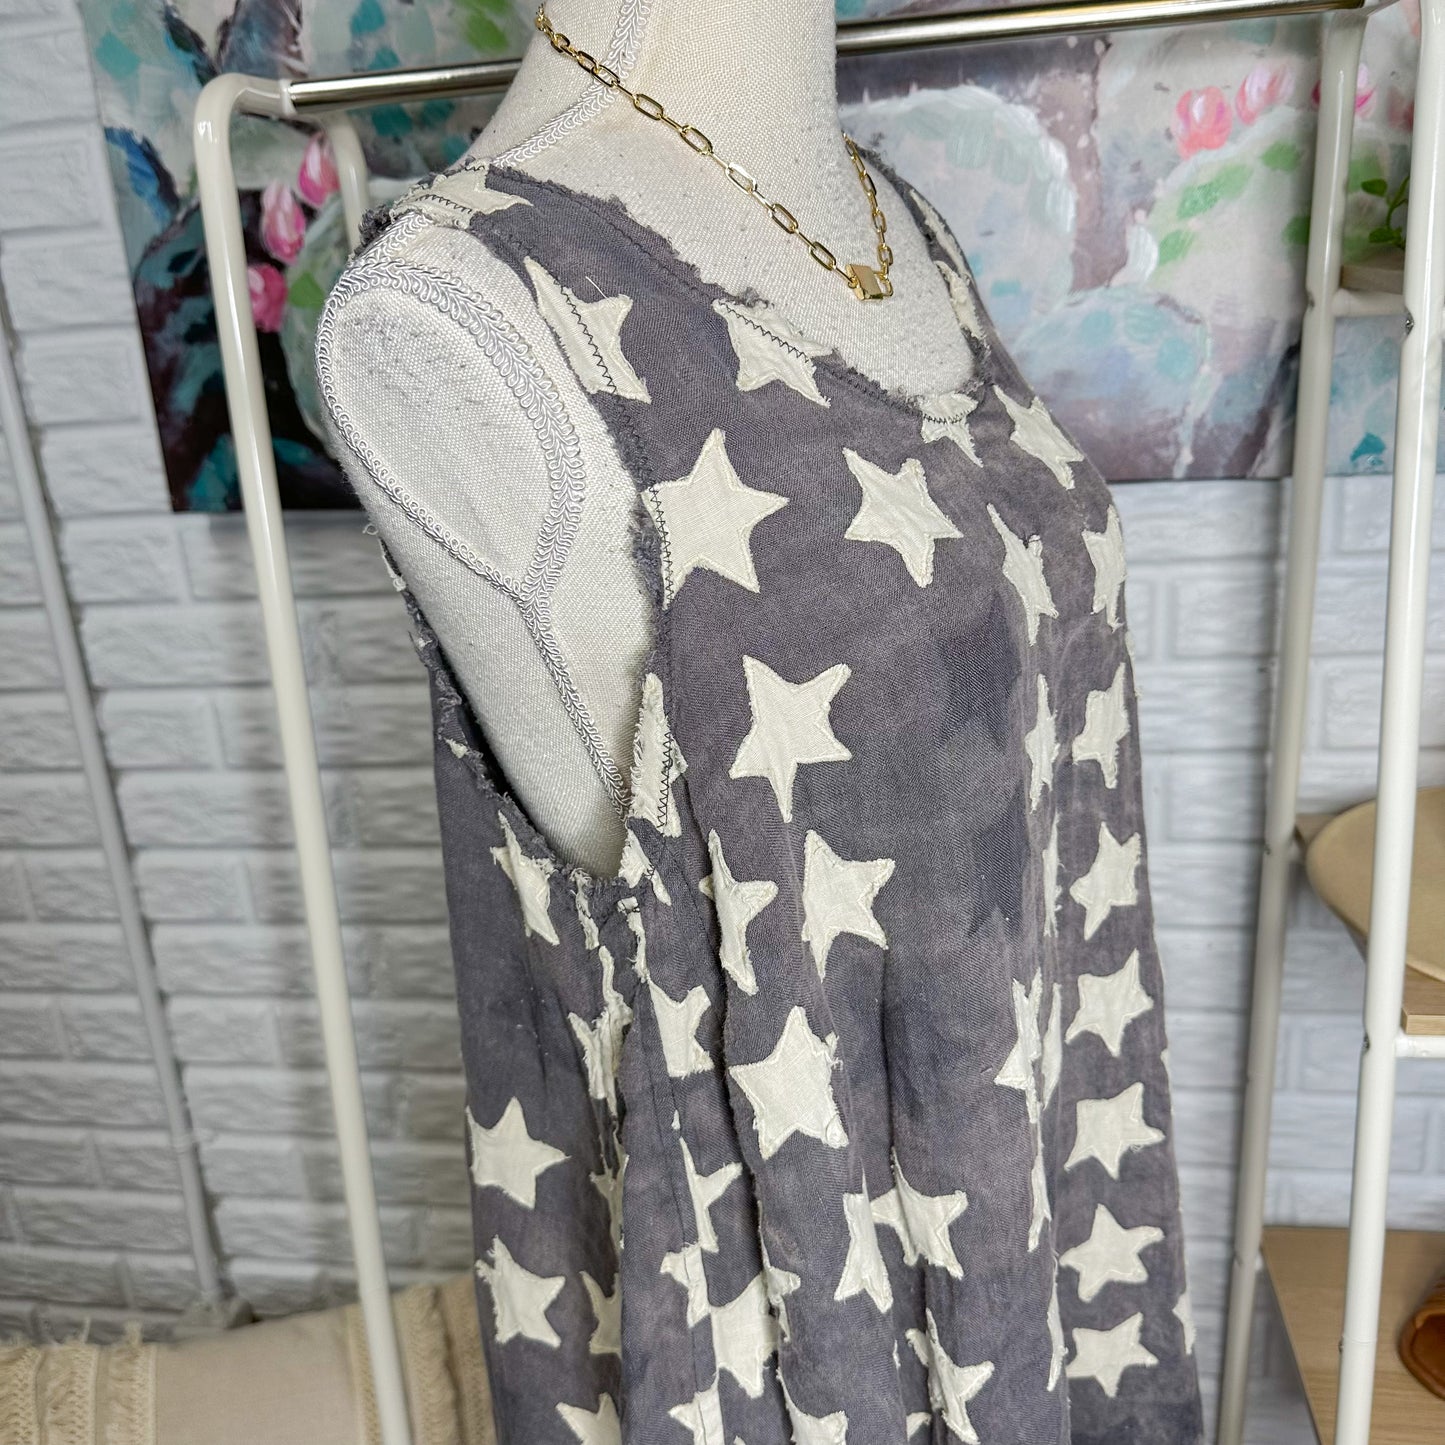 Magnolia Pearl Layla Applique Star Dress Tank Dress 628 Navy Blue Grey One Size